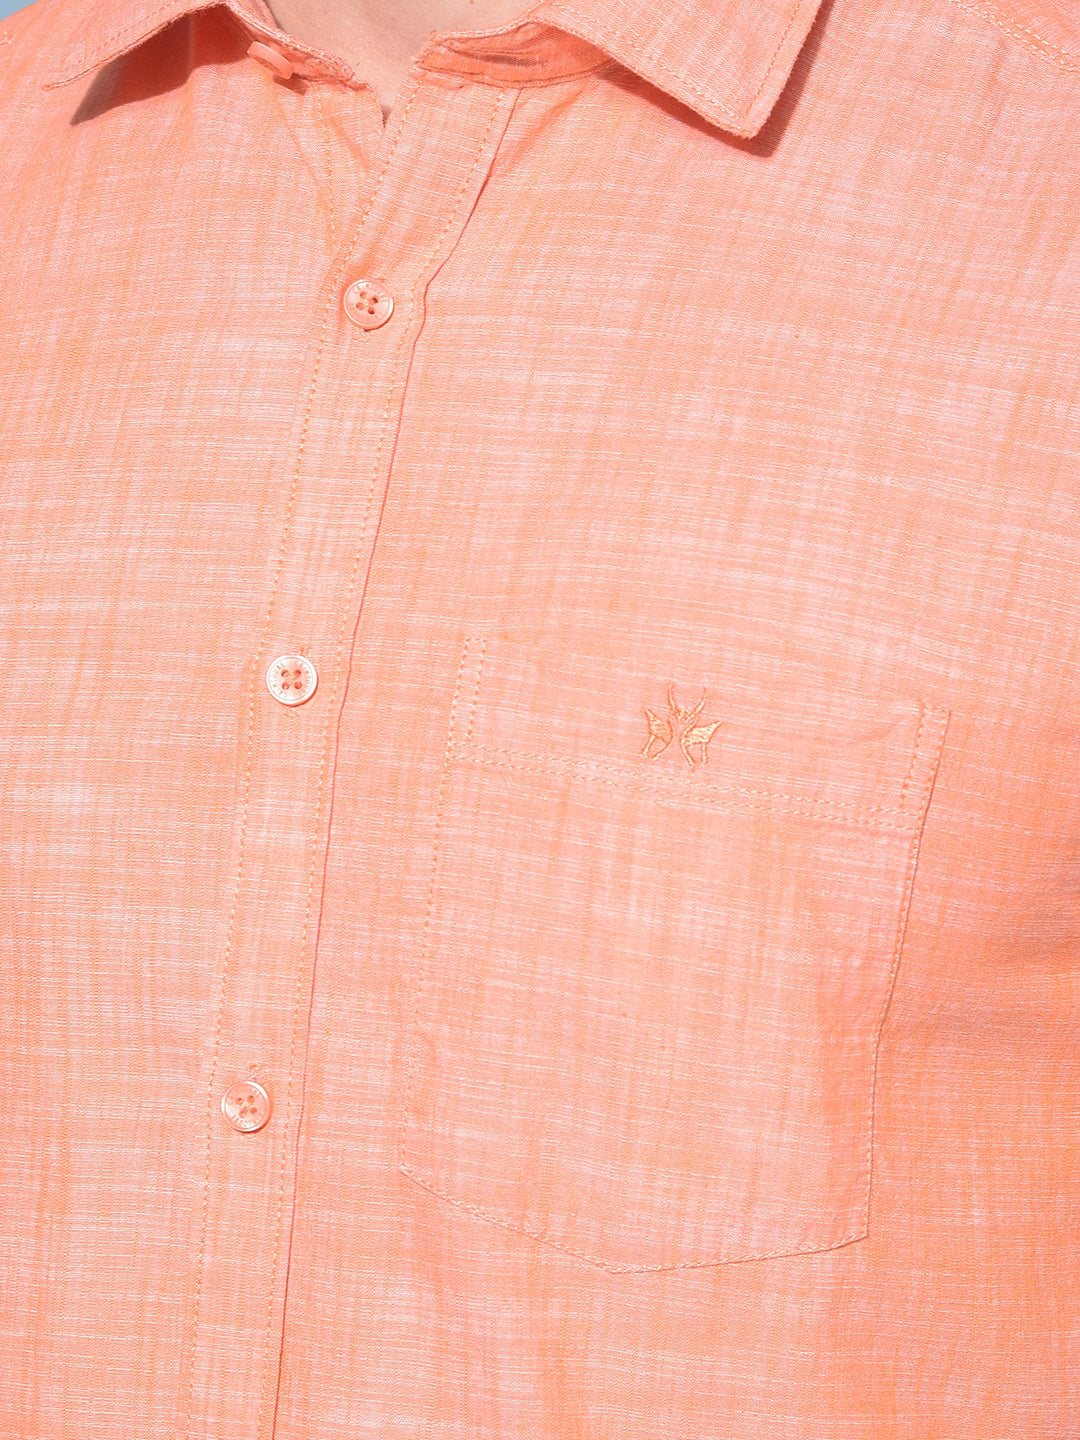 Orange Textured Print 100% Cotton Shirt-Men Shirts-Crimsoune Club